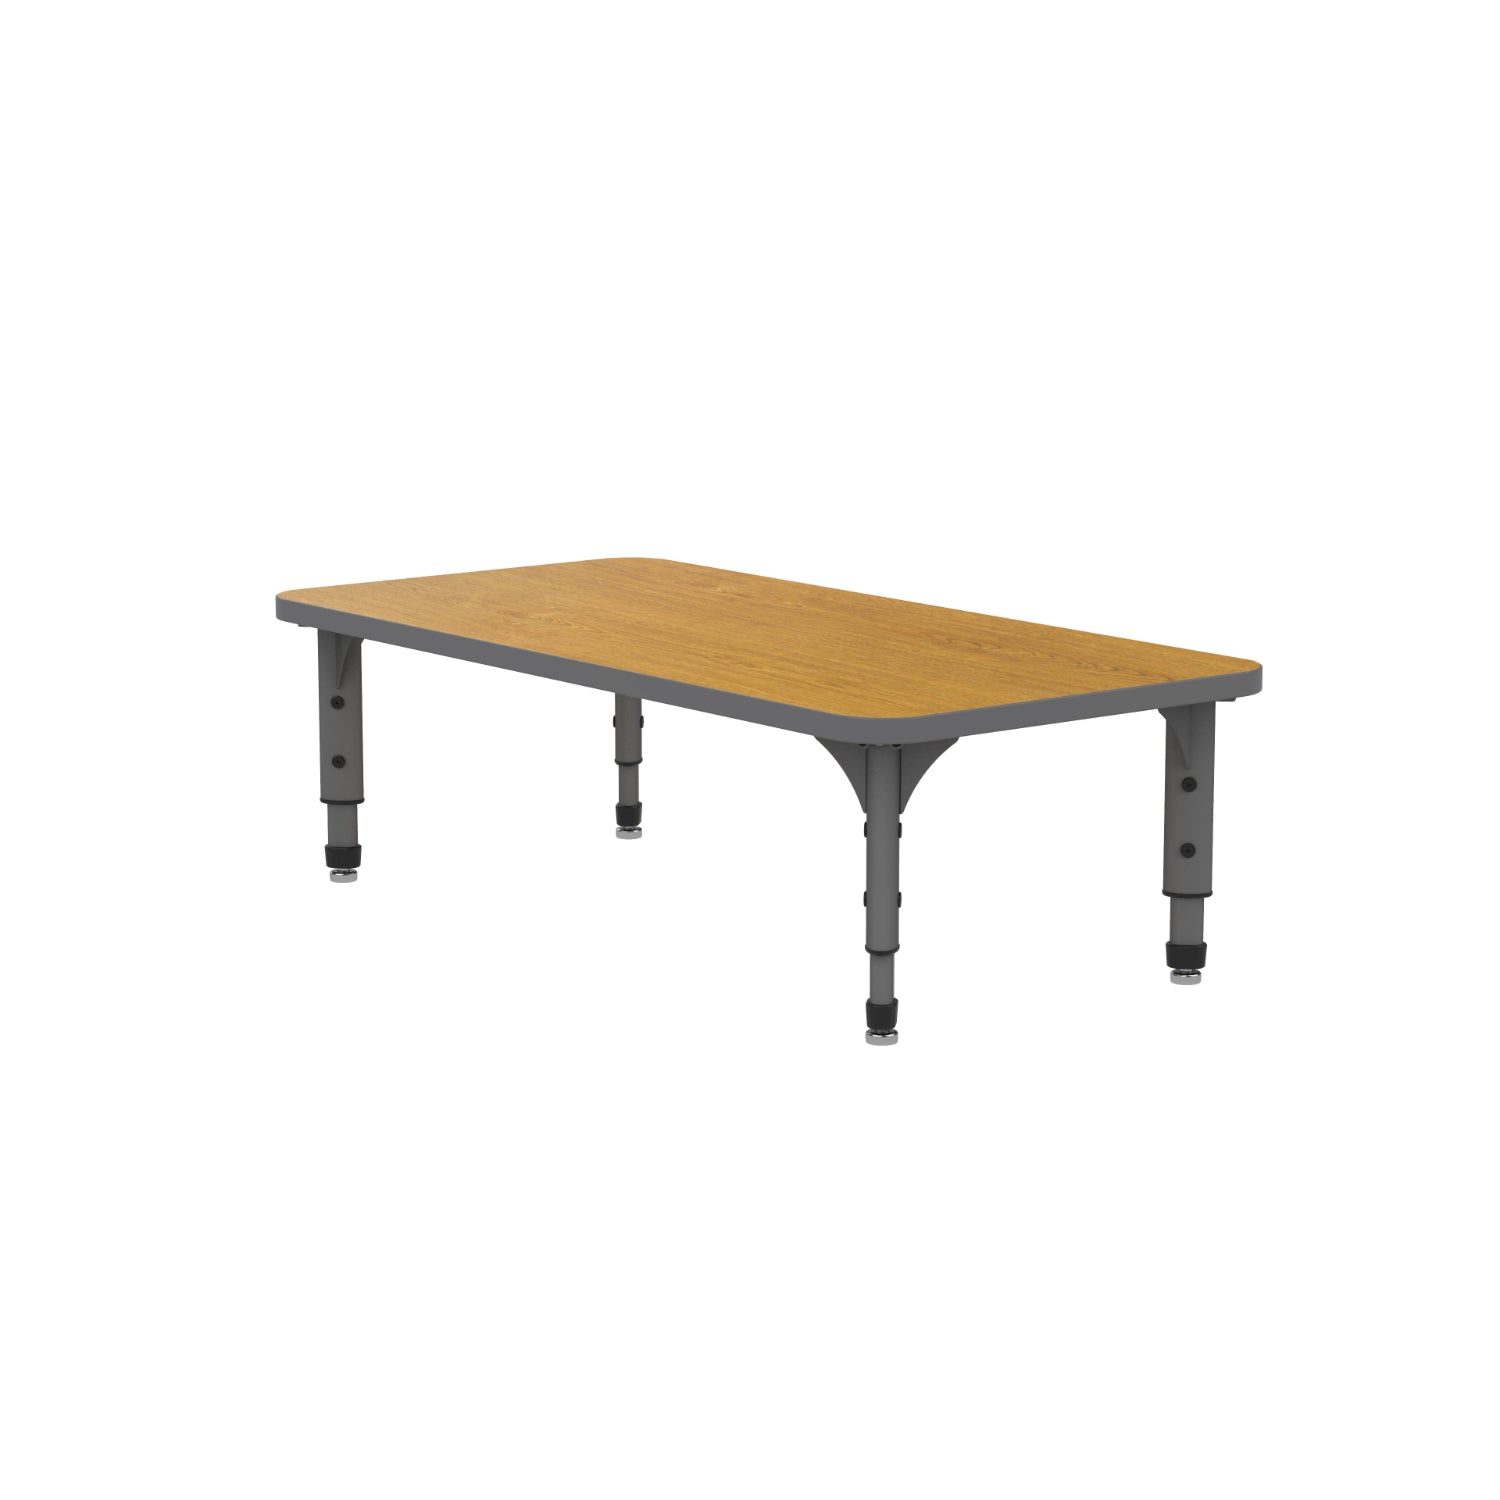 Adjustable Height Floor Activity Table, 24" x 48" Rectangle